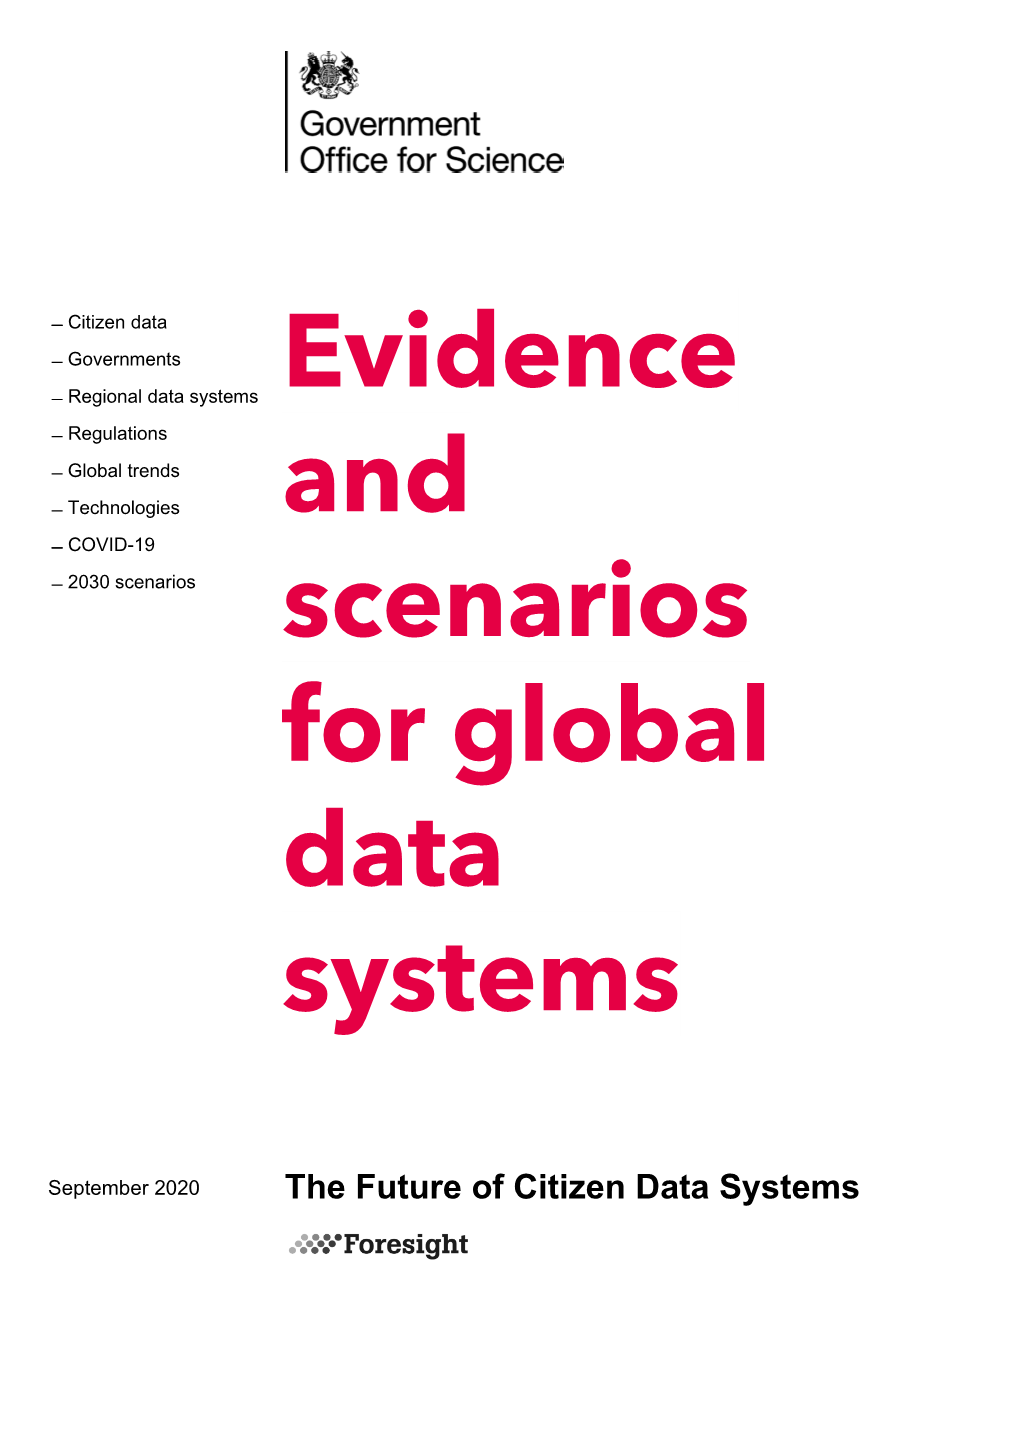 The Future of Citizen Data Systems